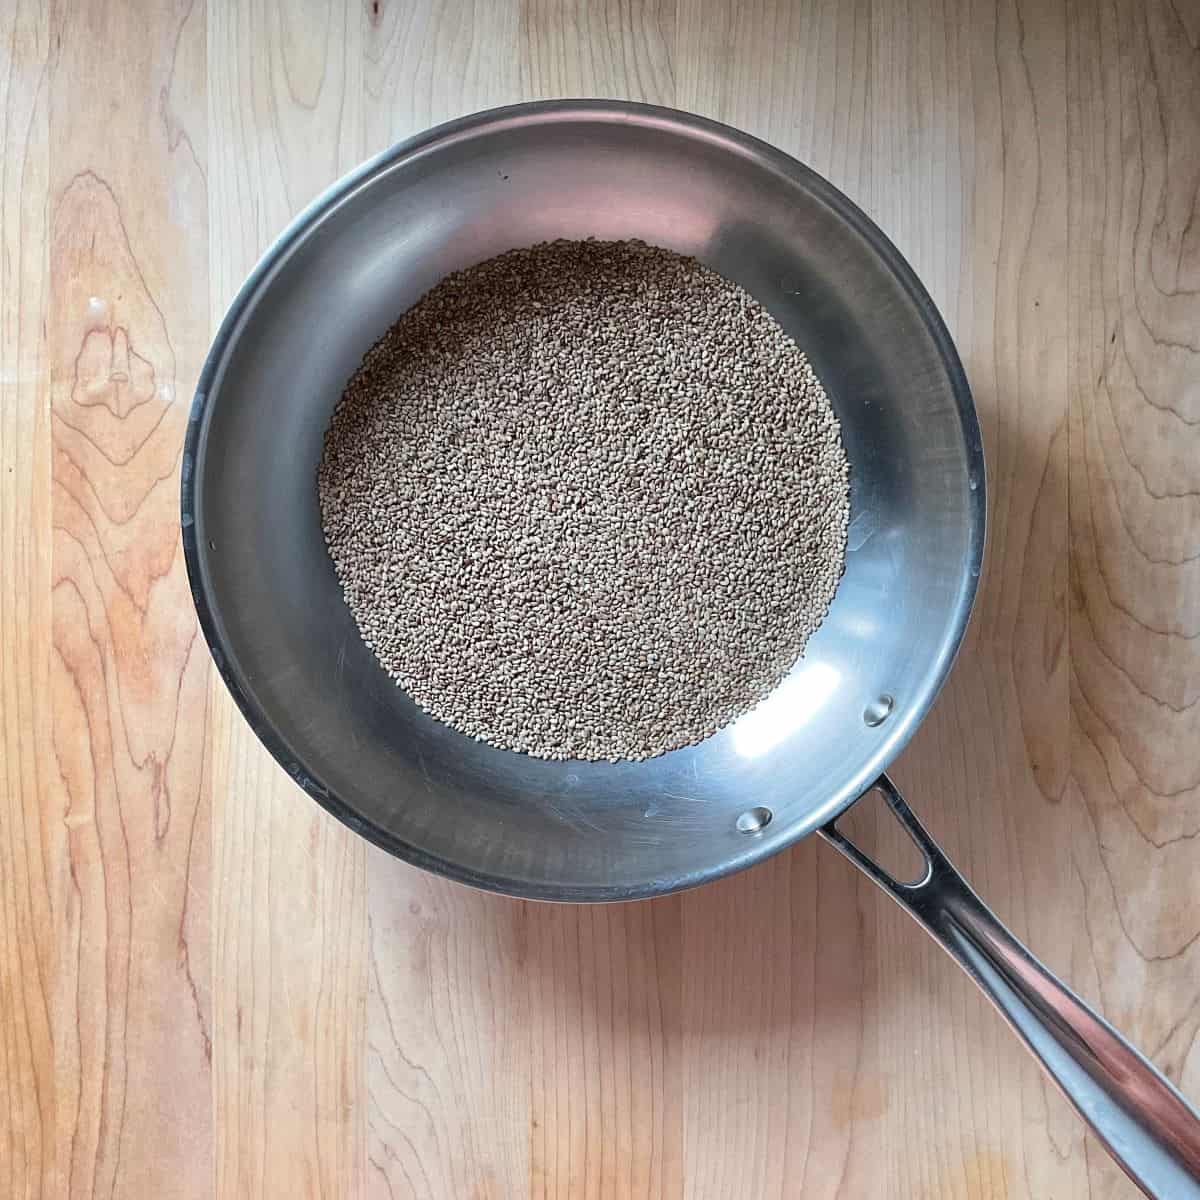 Sesame seeds toast in a skillet.